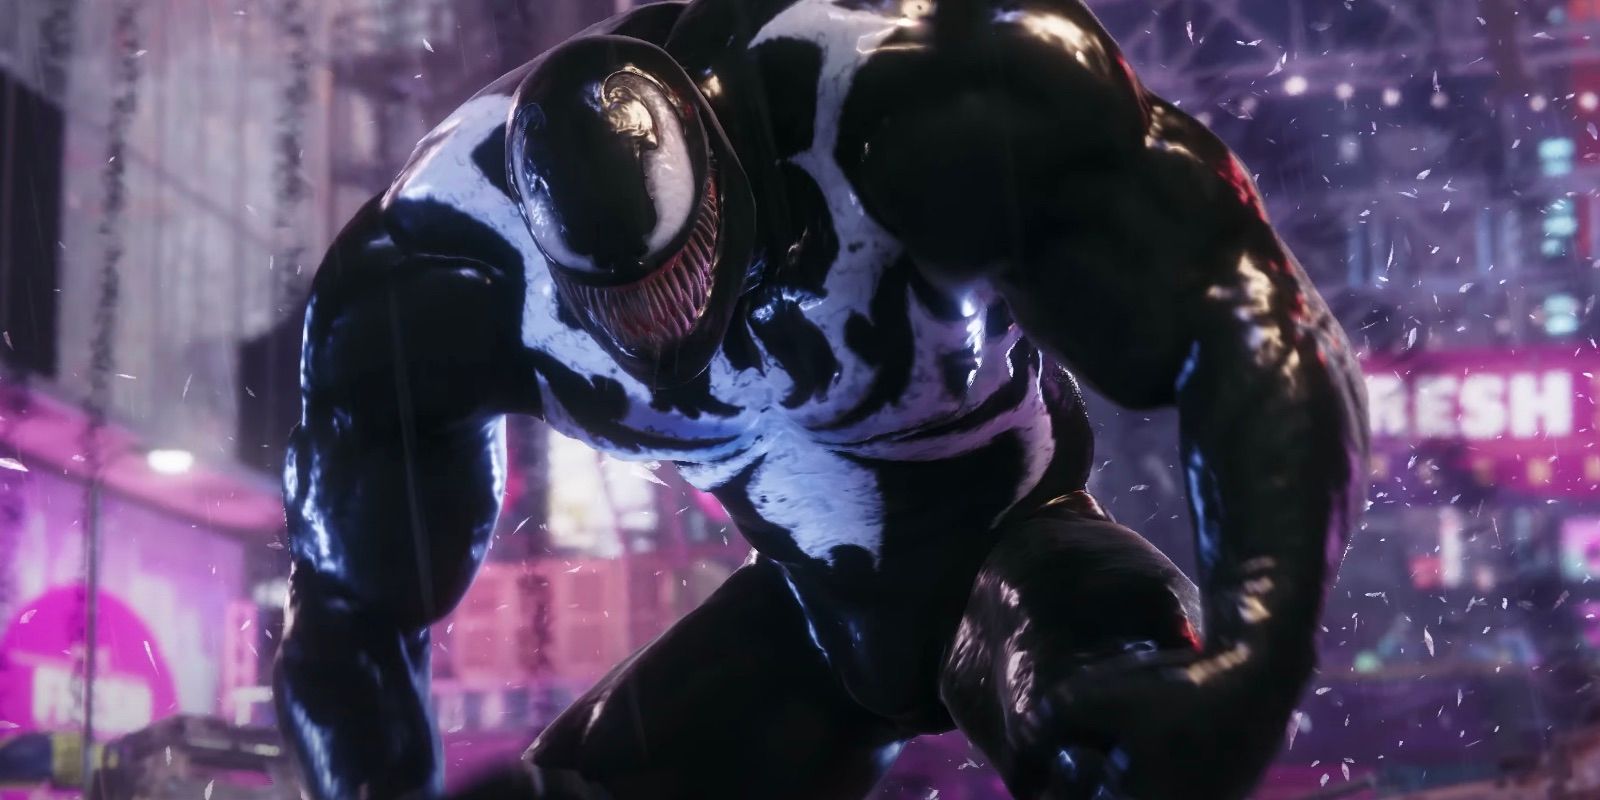 Marvel's Spider-Man 2 Villains Revealed - Kraven, Prowler & More